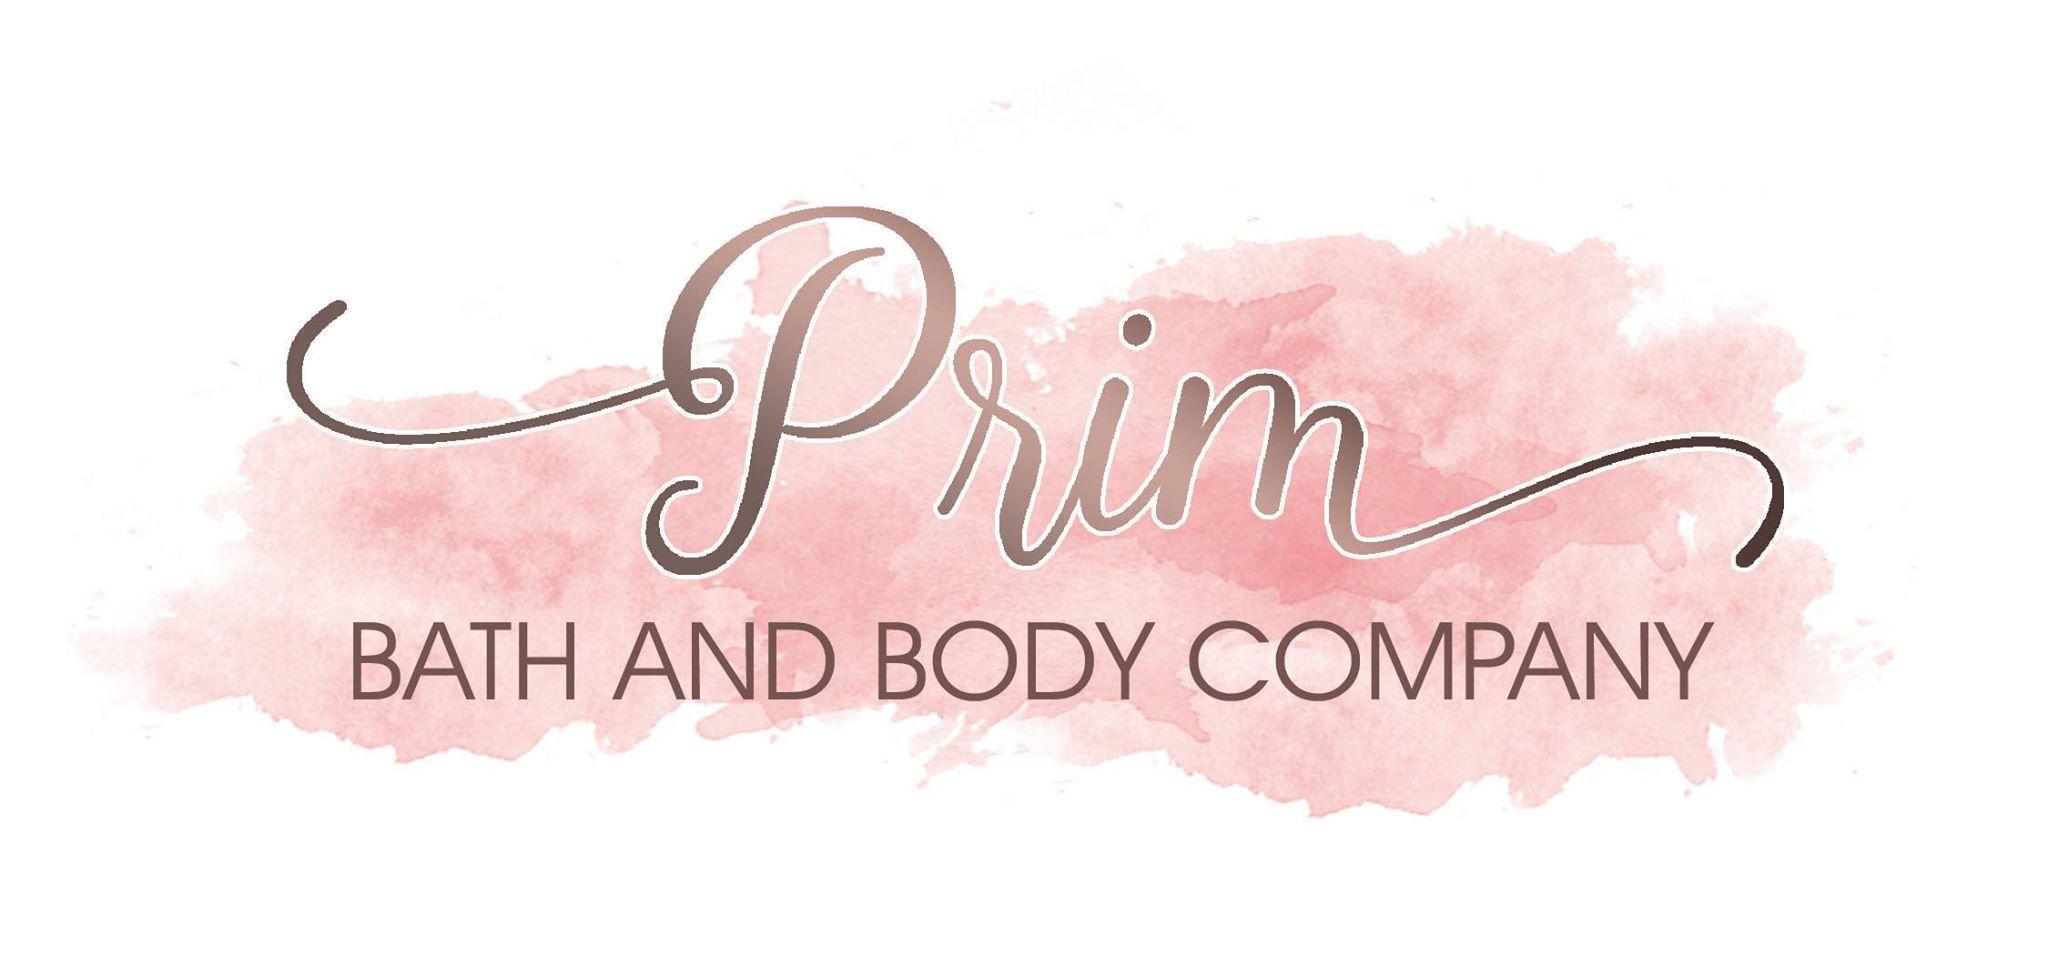 Bath and Body Company Logo - Prim Bath and Body Company